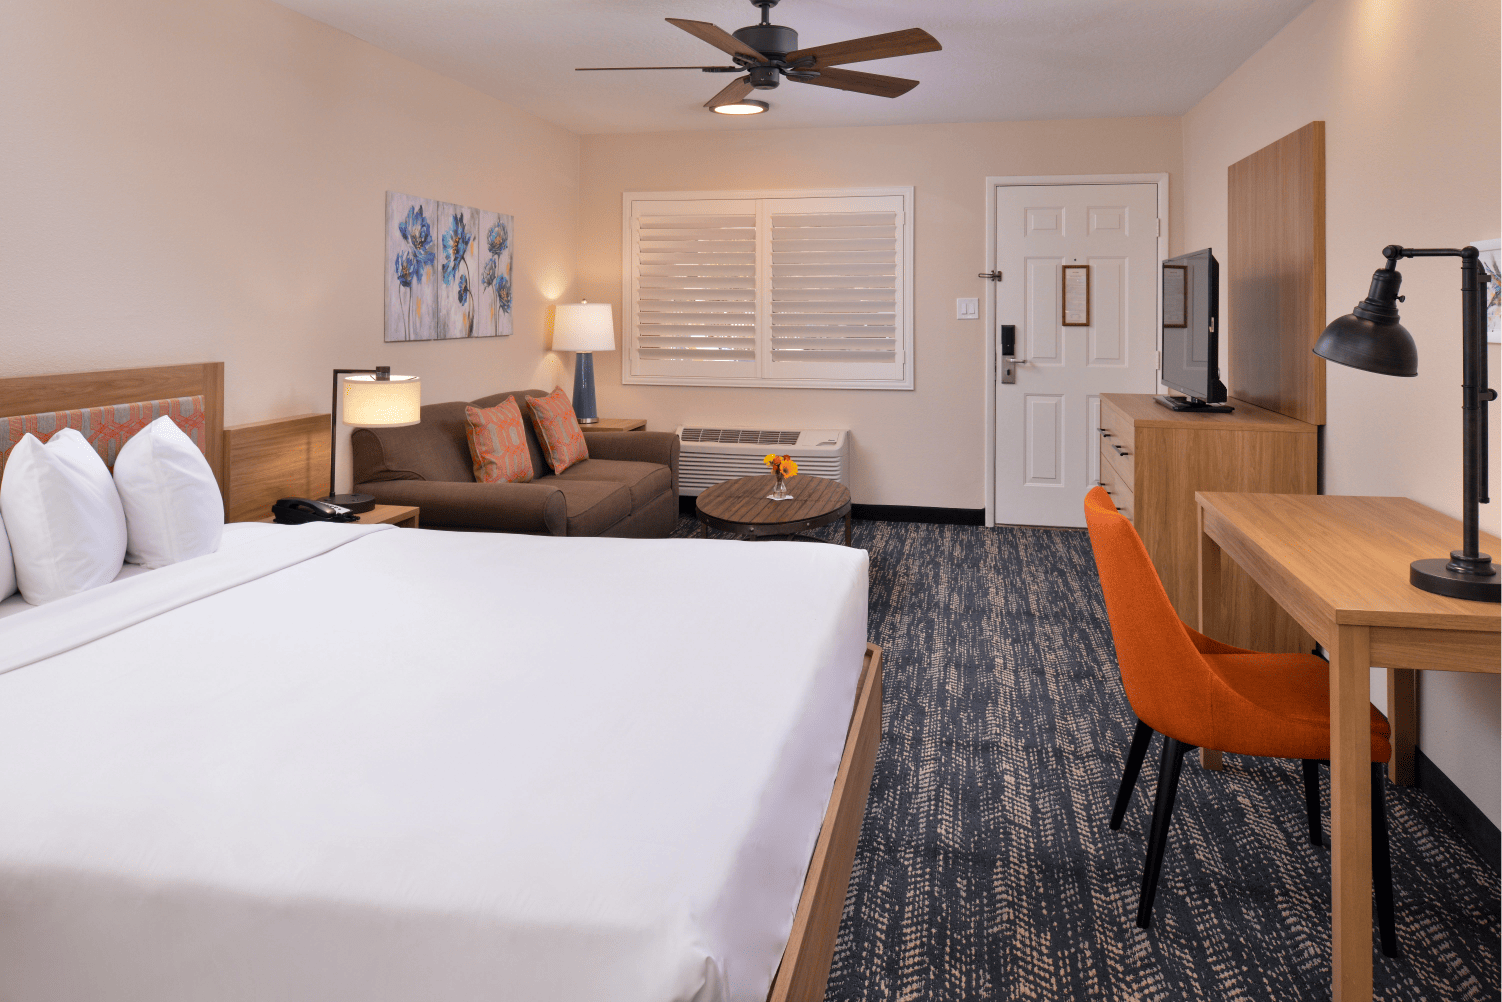 La Fuente Inn and Suites Overview